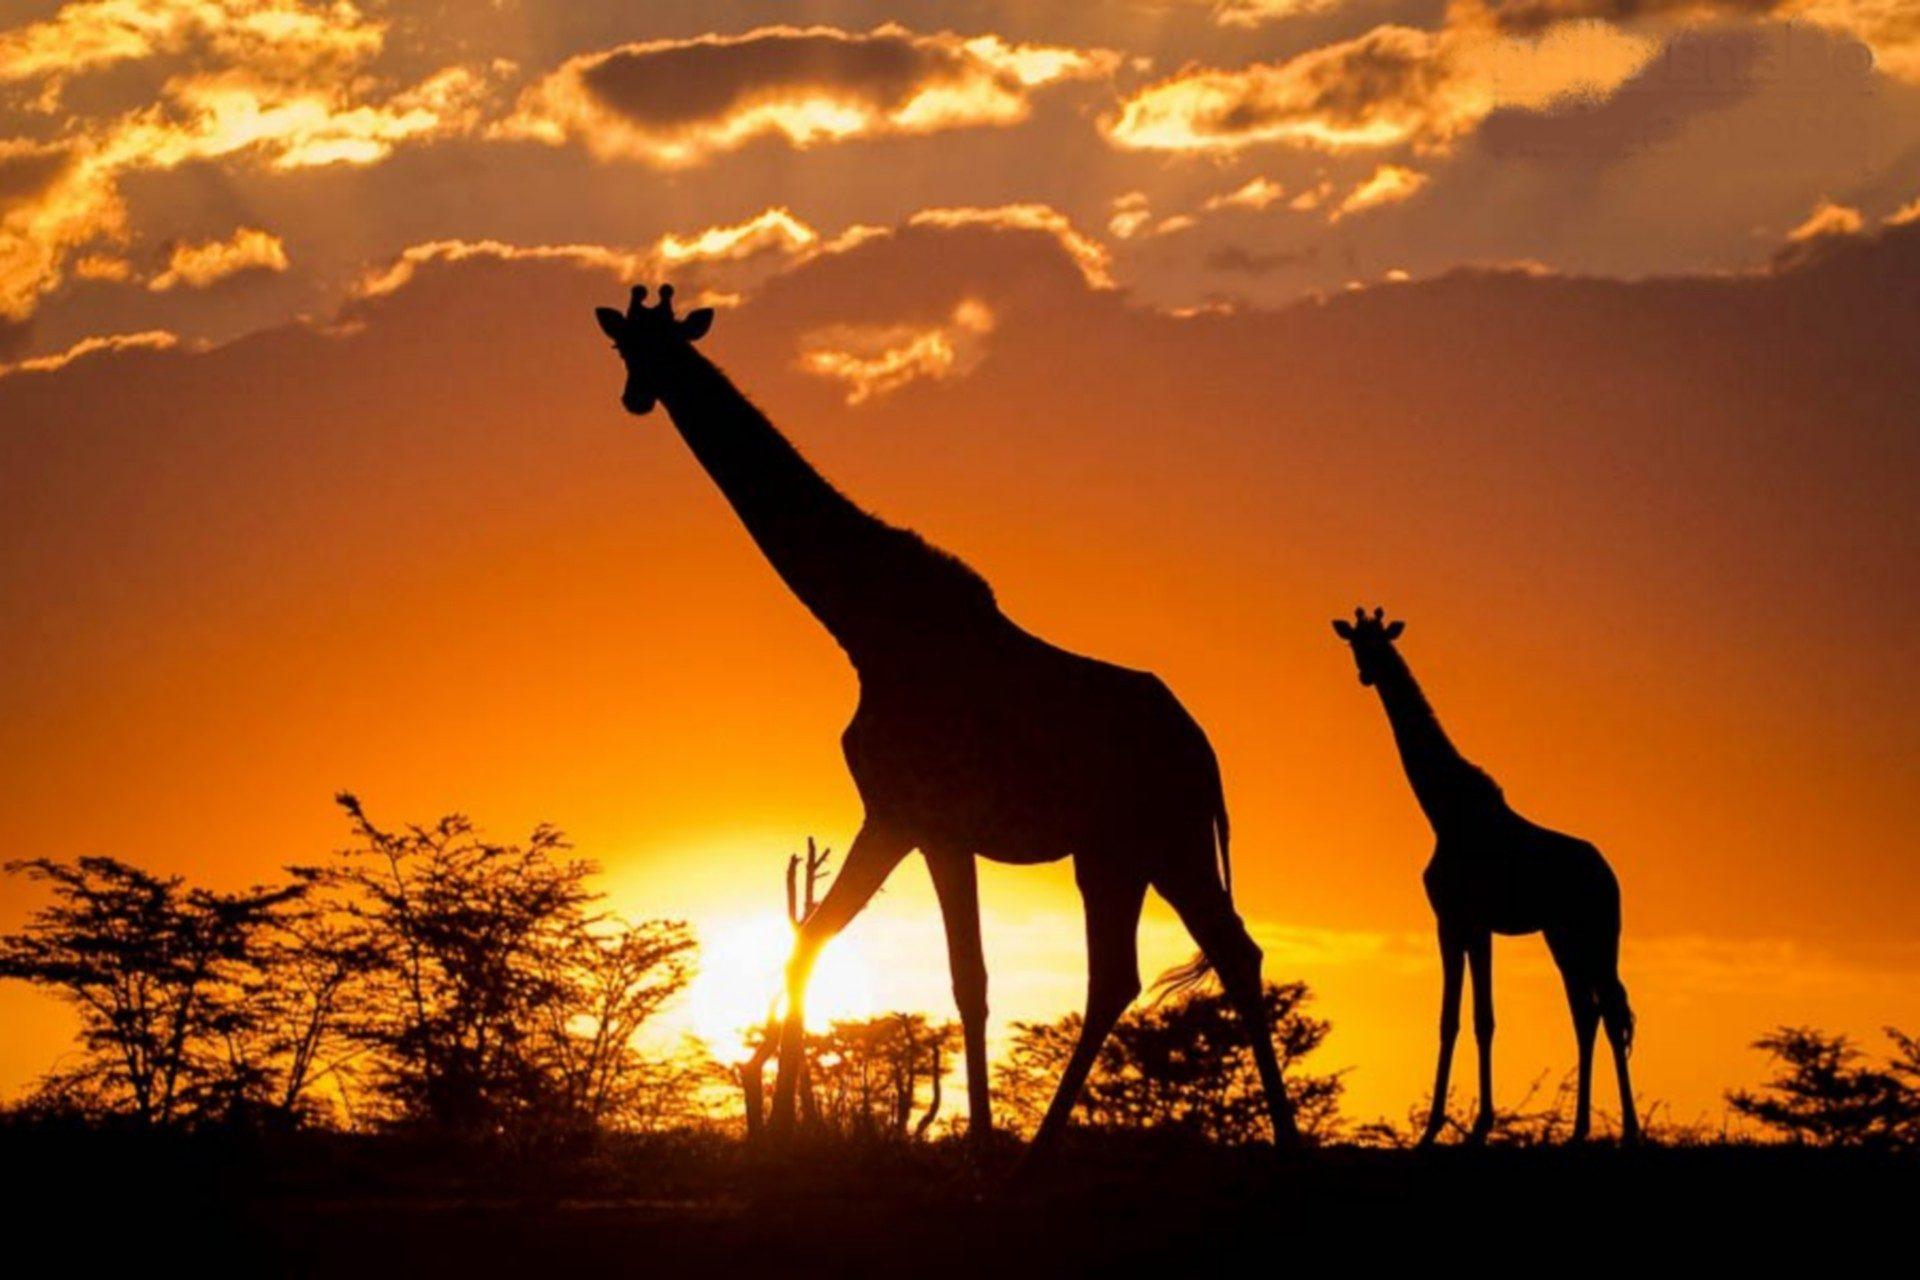 voyage safari photo au kenya